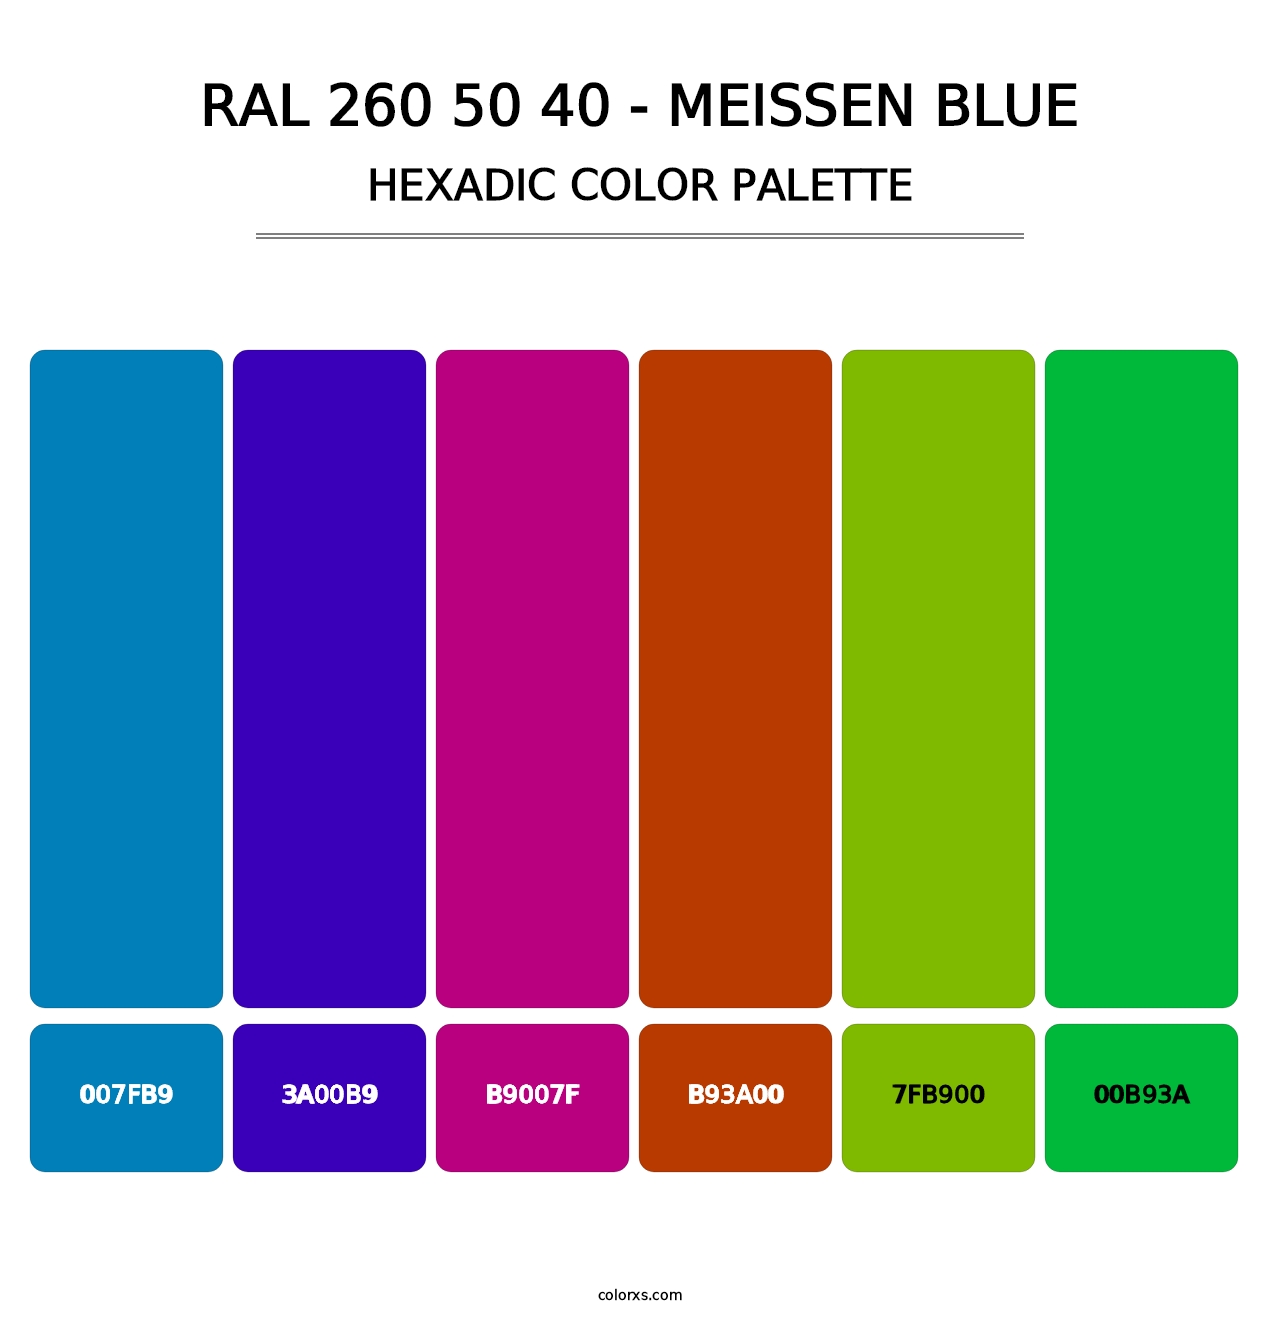 RAL 260 50 40 - Meissen Blue - Hexadic Color Palette